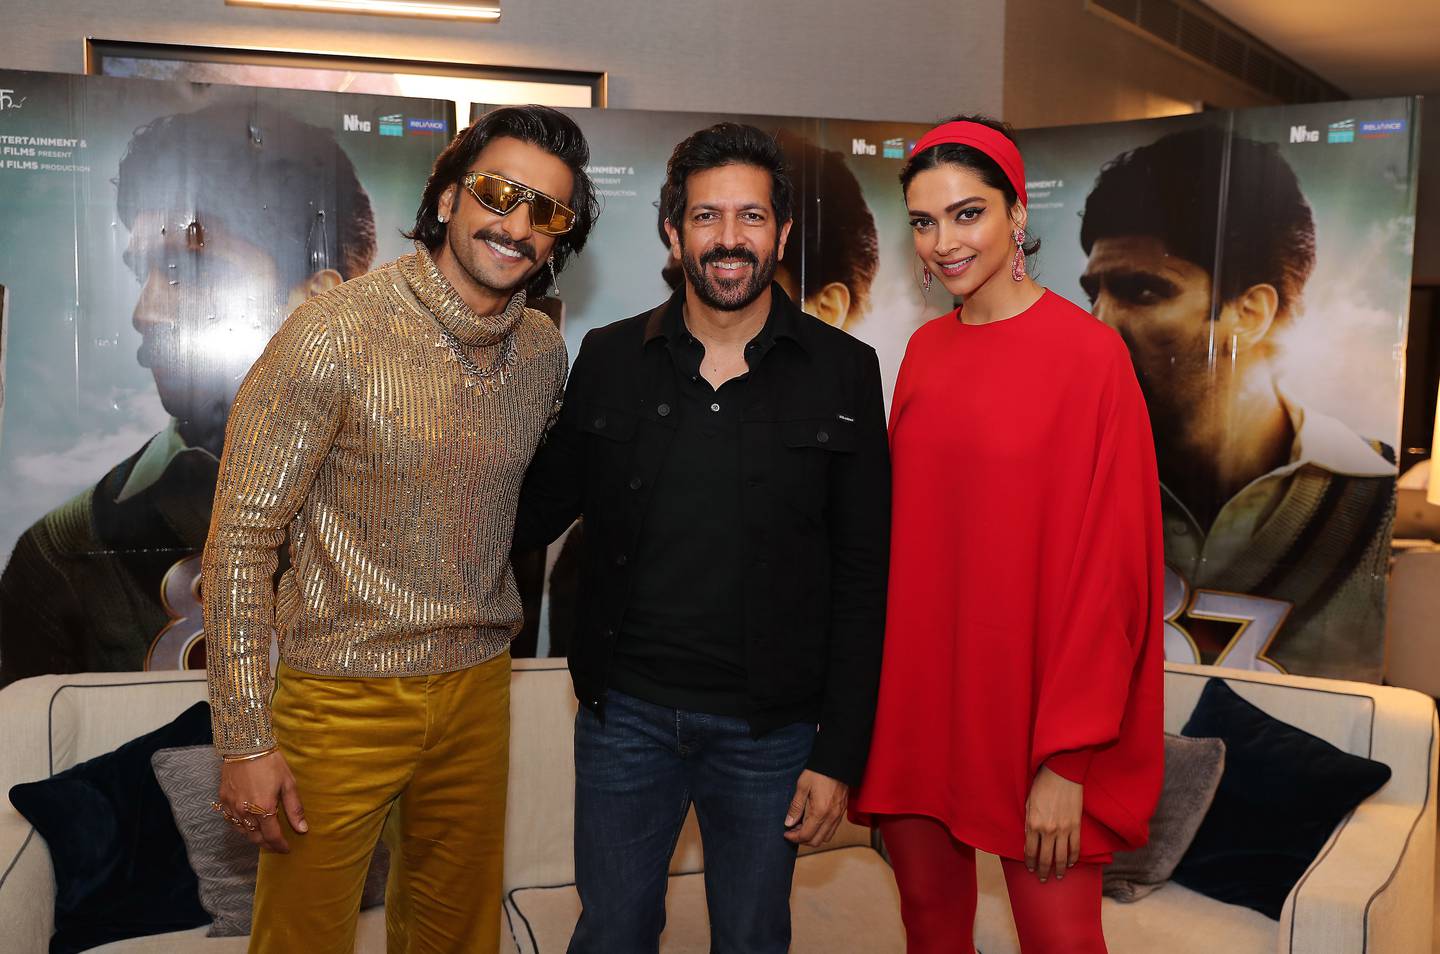 Left to Right - Ranveer Singh, Kabir Khan, director, and Deepika Padukone of the Bollywood movie 83. Pawan Singh / The National